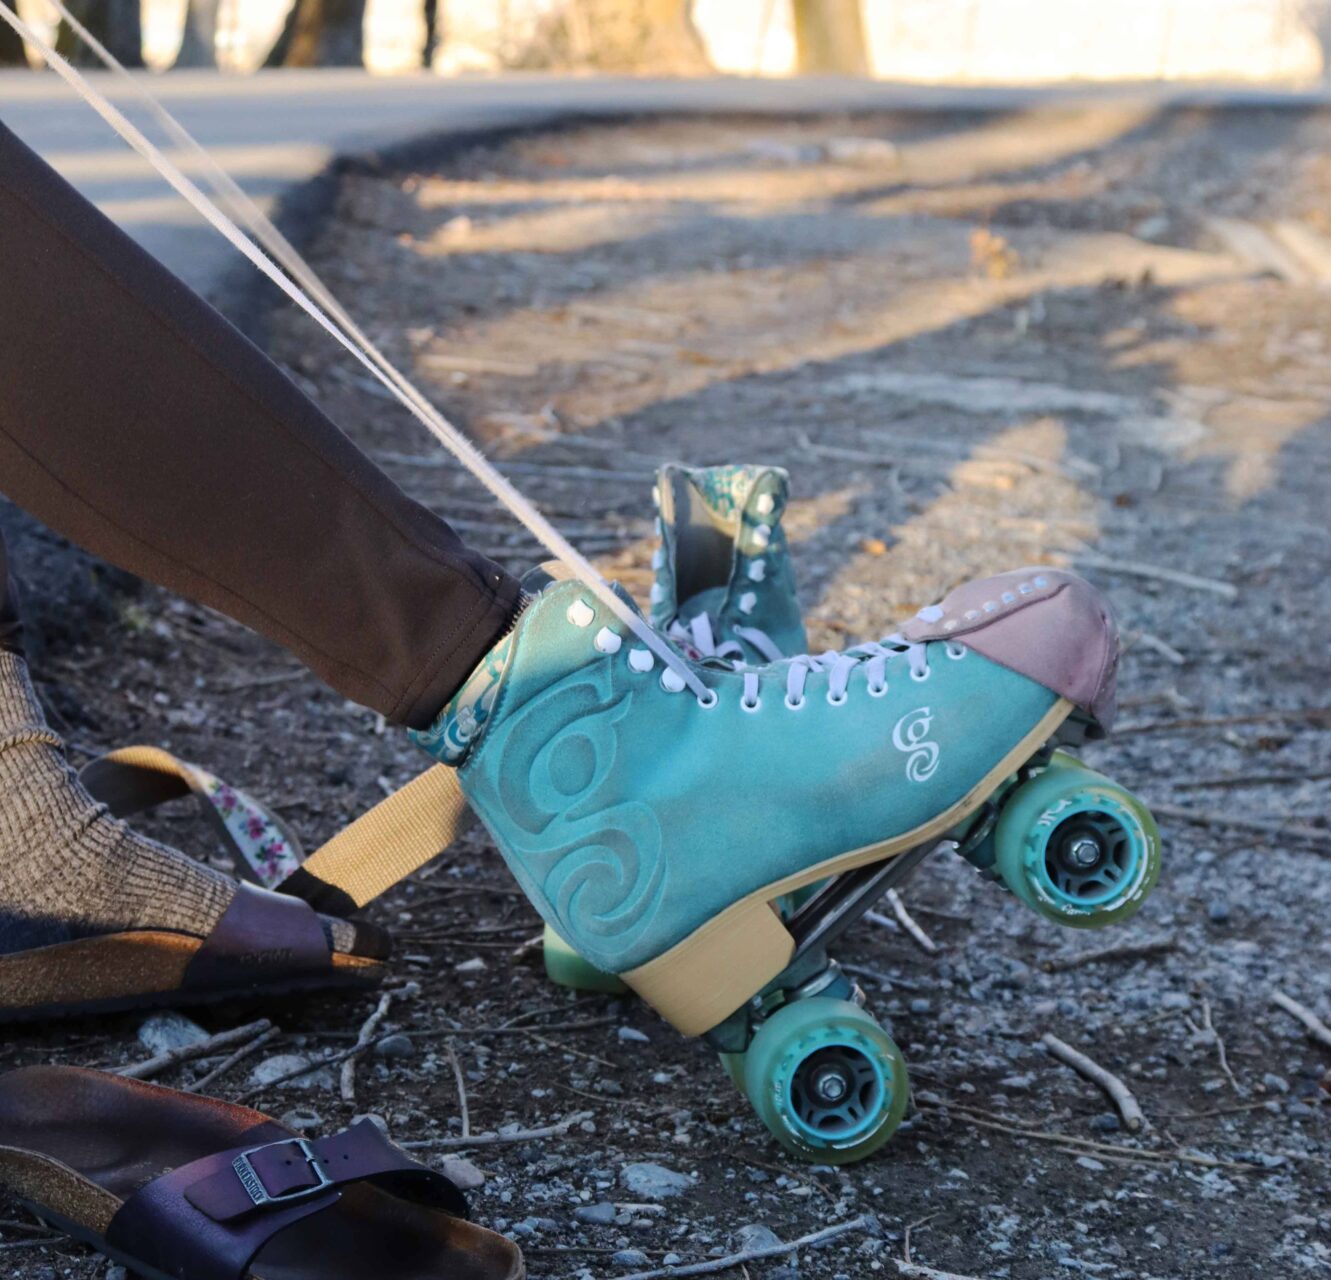 Grab Your Skates — It's Ice Skating Season in LA! – EmpowerLA